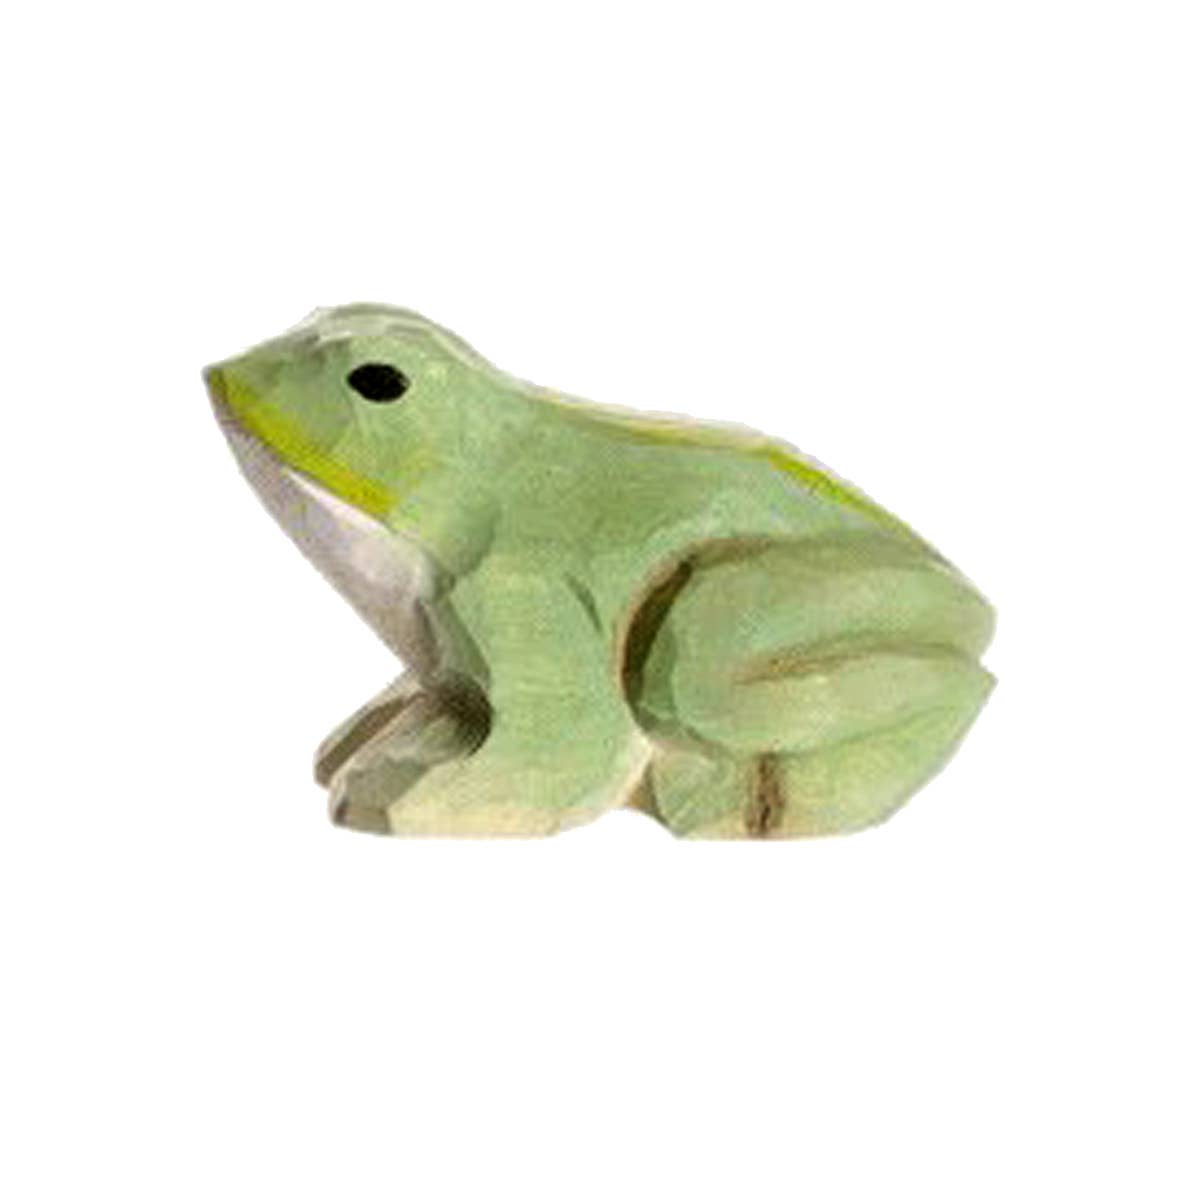 Wudimals® Wooden Frog Animal Toy